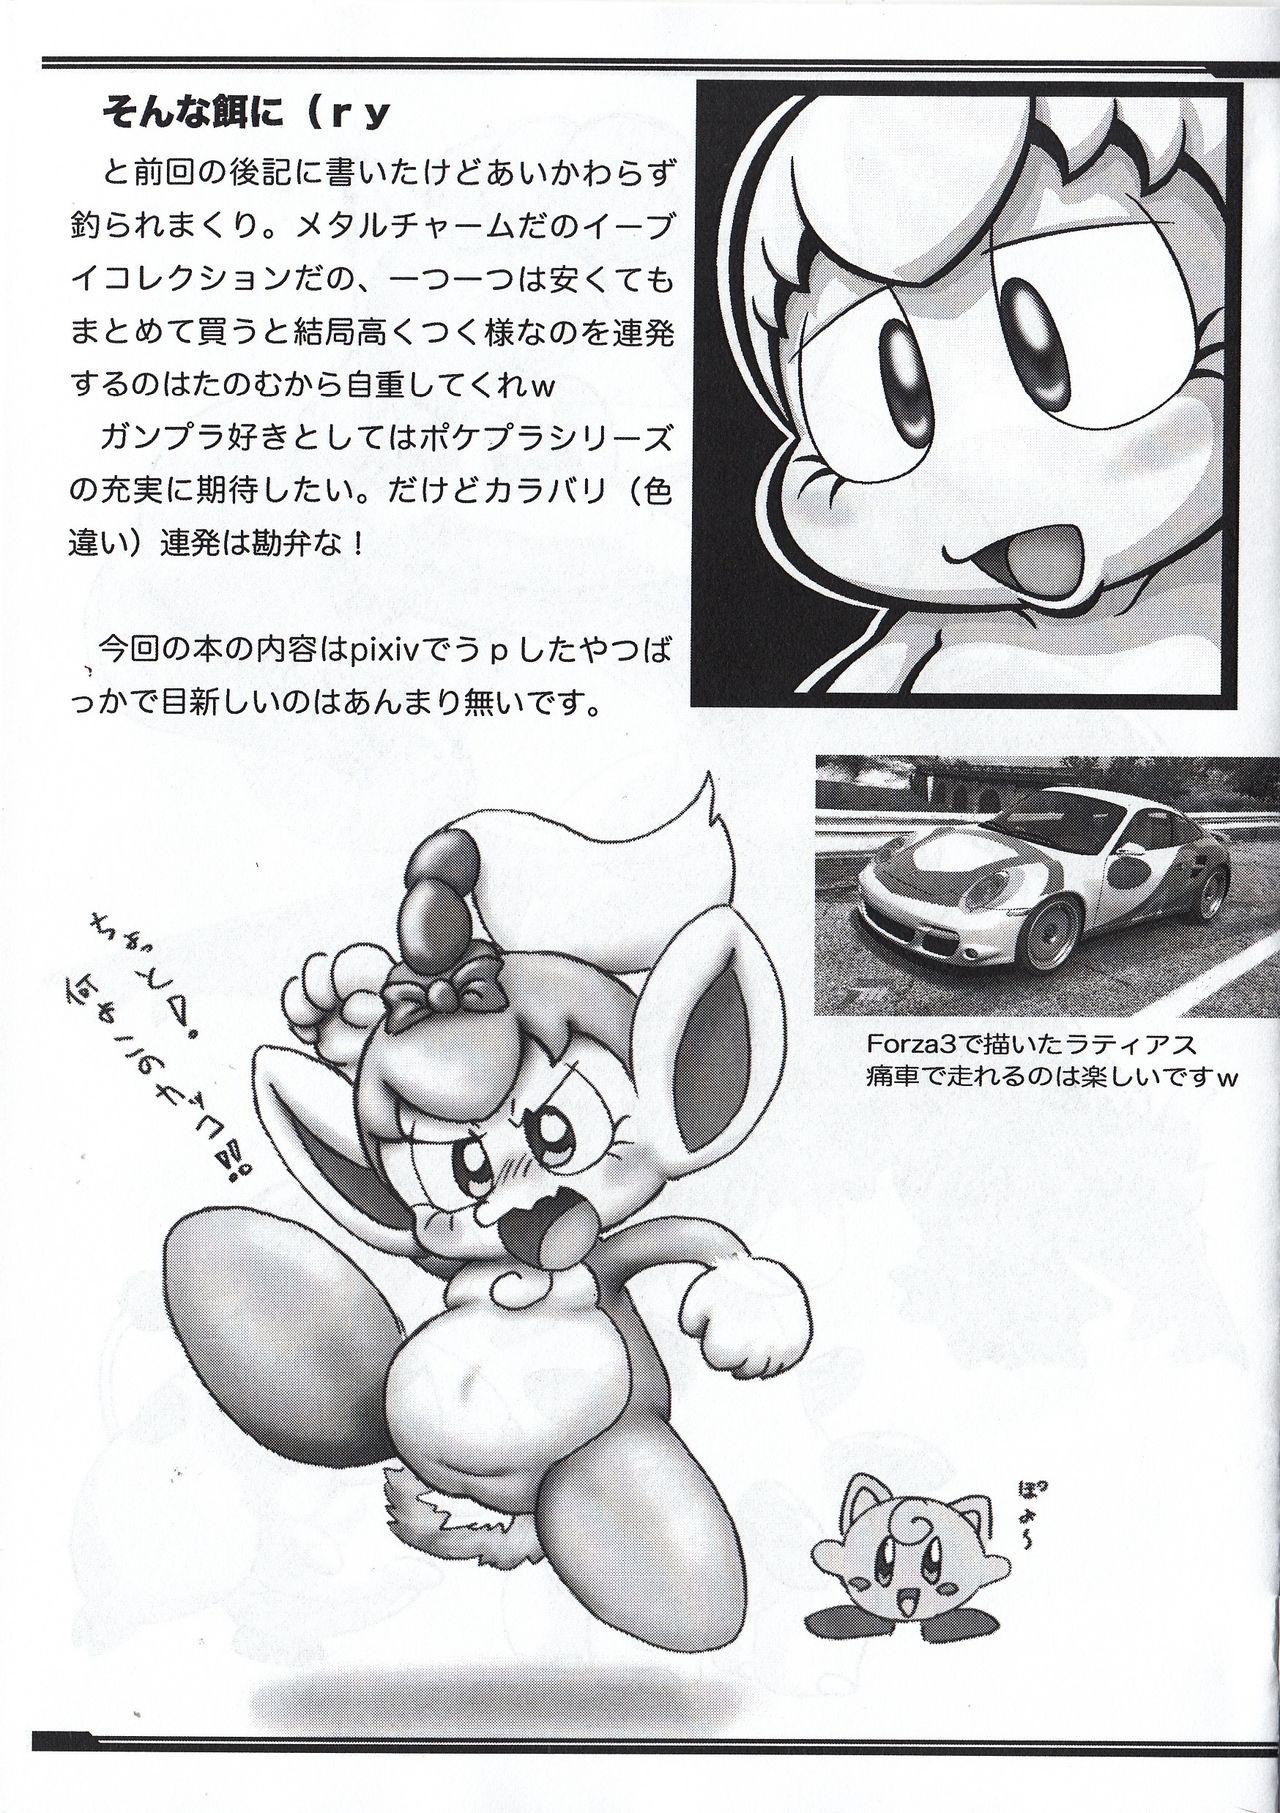 Balls P-Kemo09 - Pokemon Kirby Animal crossing Celeb - Page 2